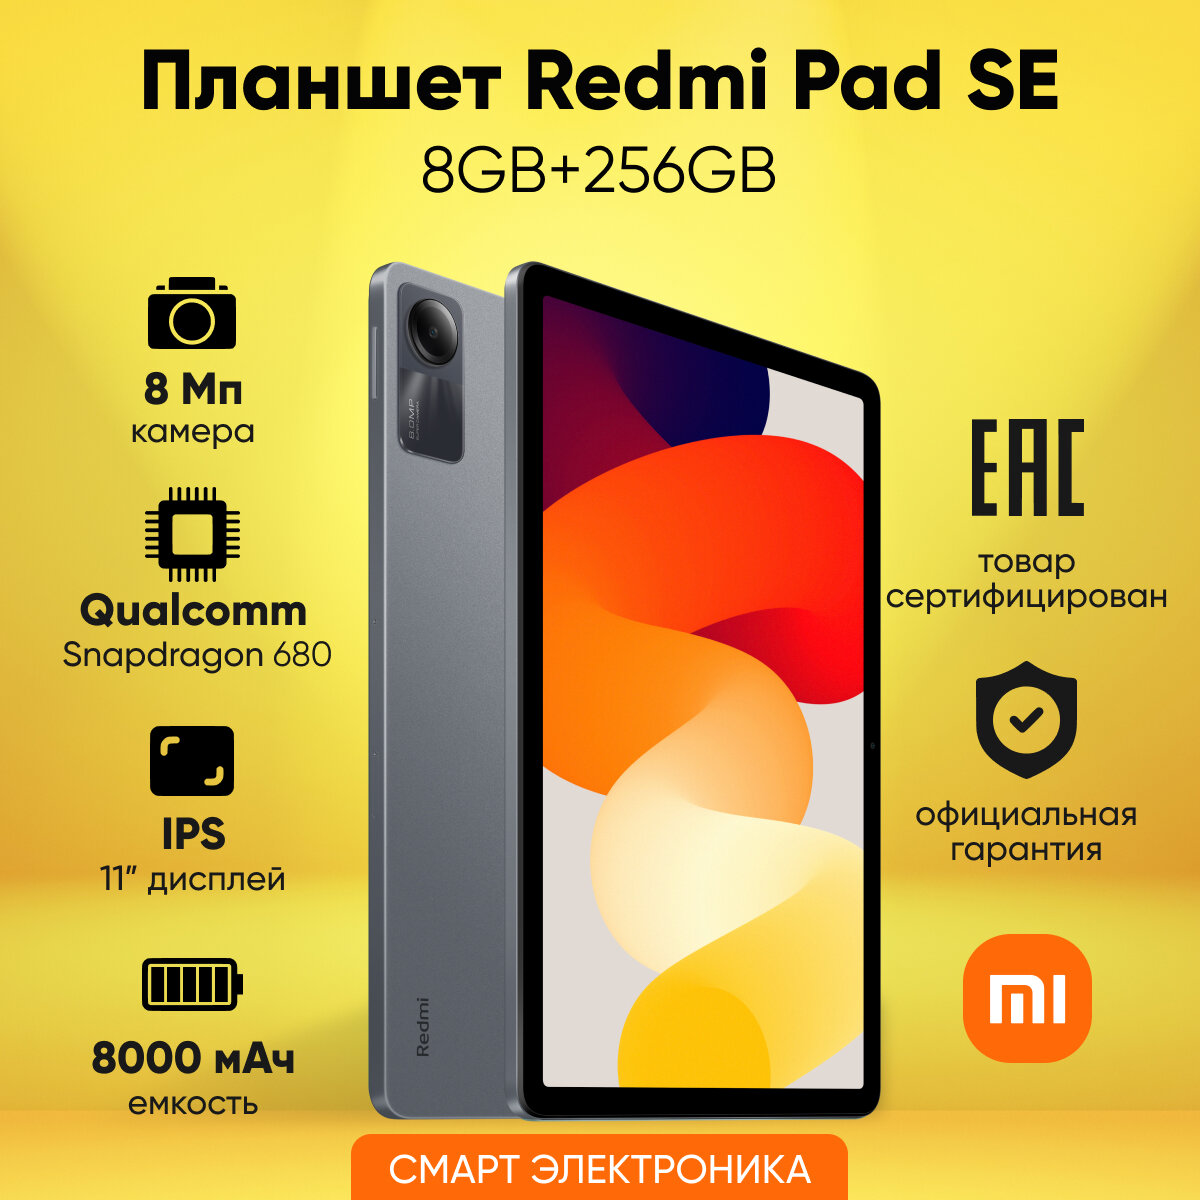 Планшет Redmi Pad SE 8GB+256GB Gray